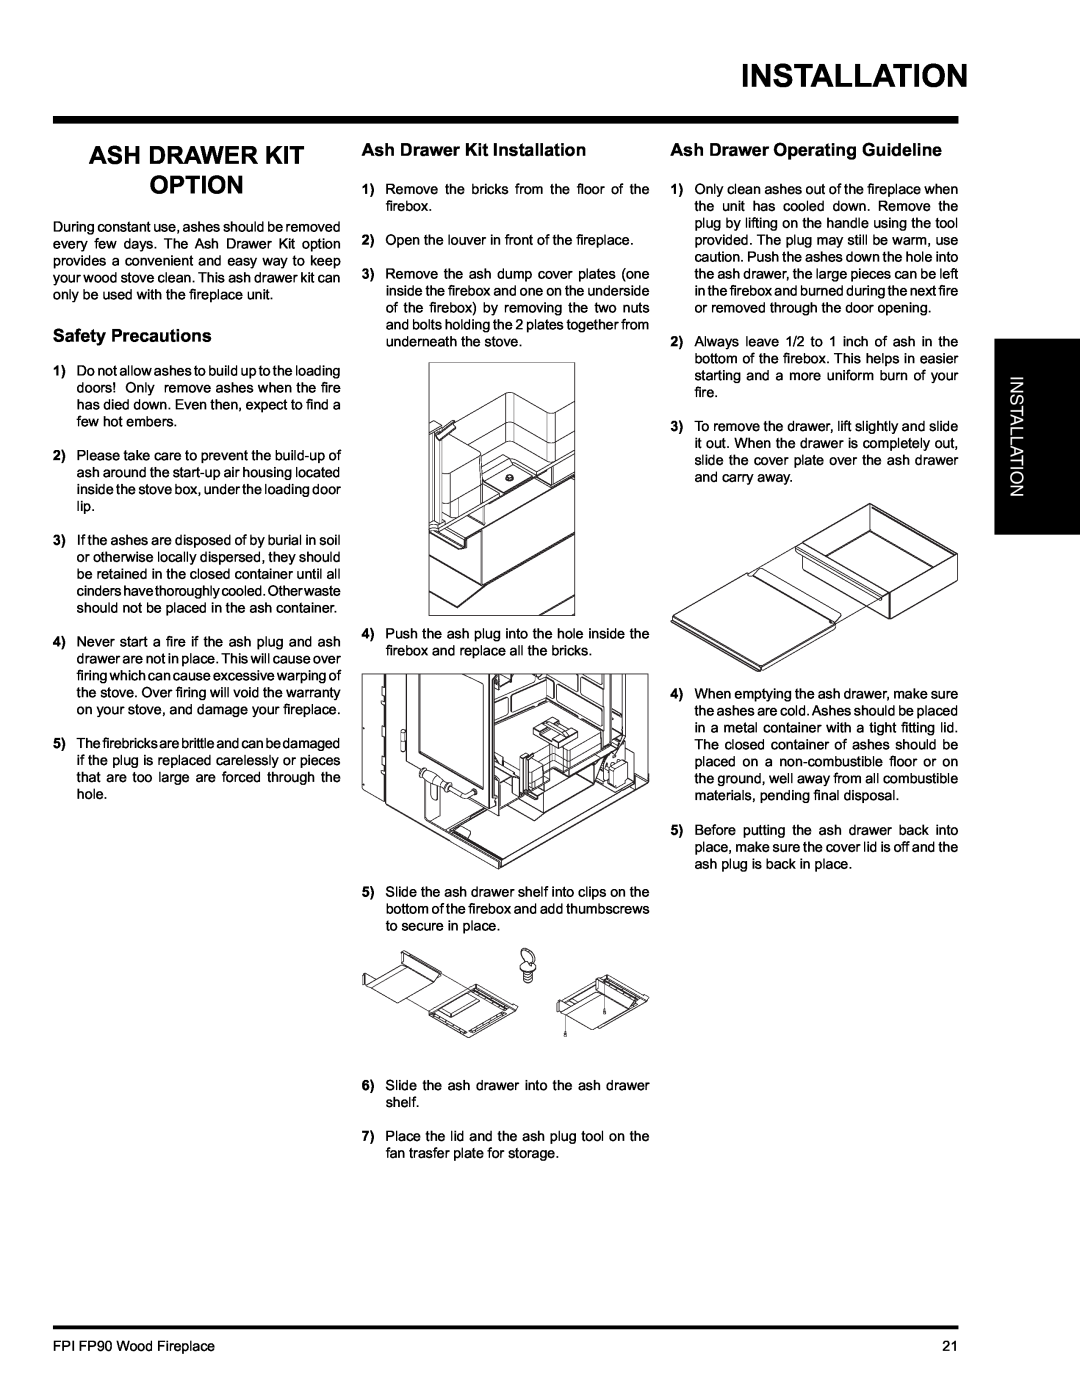 Regency FP90 Option, Ash Drawer Kit Installation, Safety Precautions, Ash Drawer Operating Guideline 